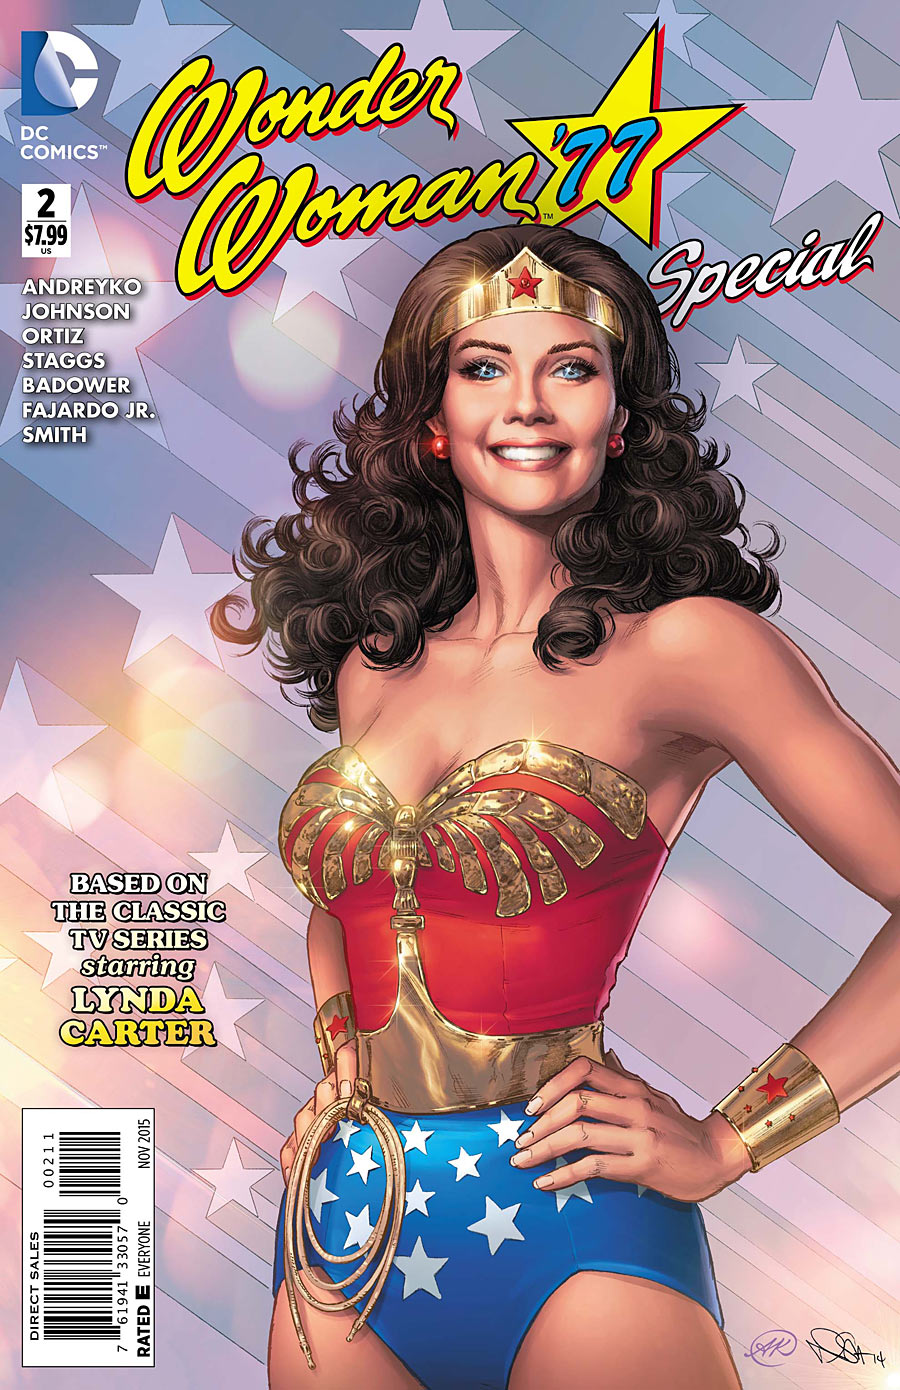 Wonder Woman '77 Special Vol 1 2, DC Database